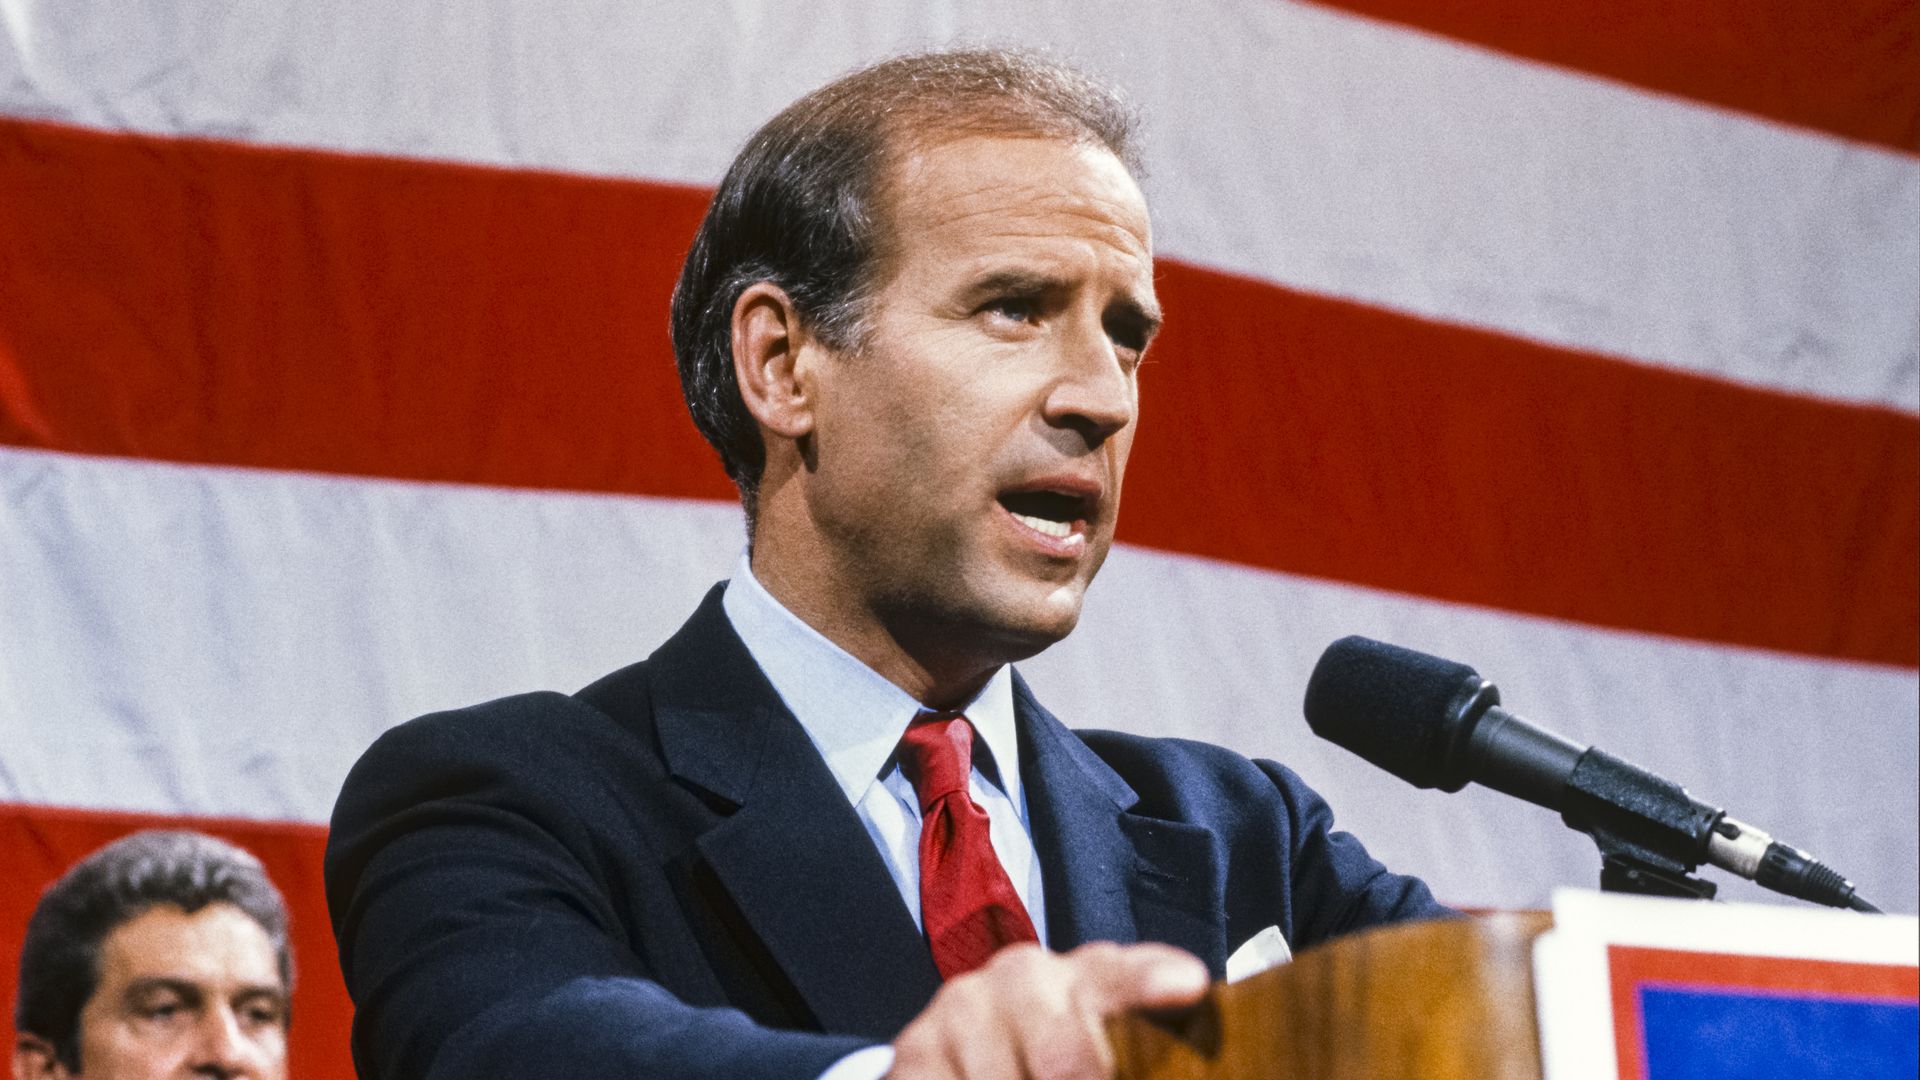 Joe Biden is seen announcing his first run for the presidency in 1987.